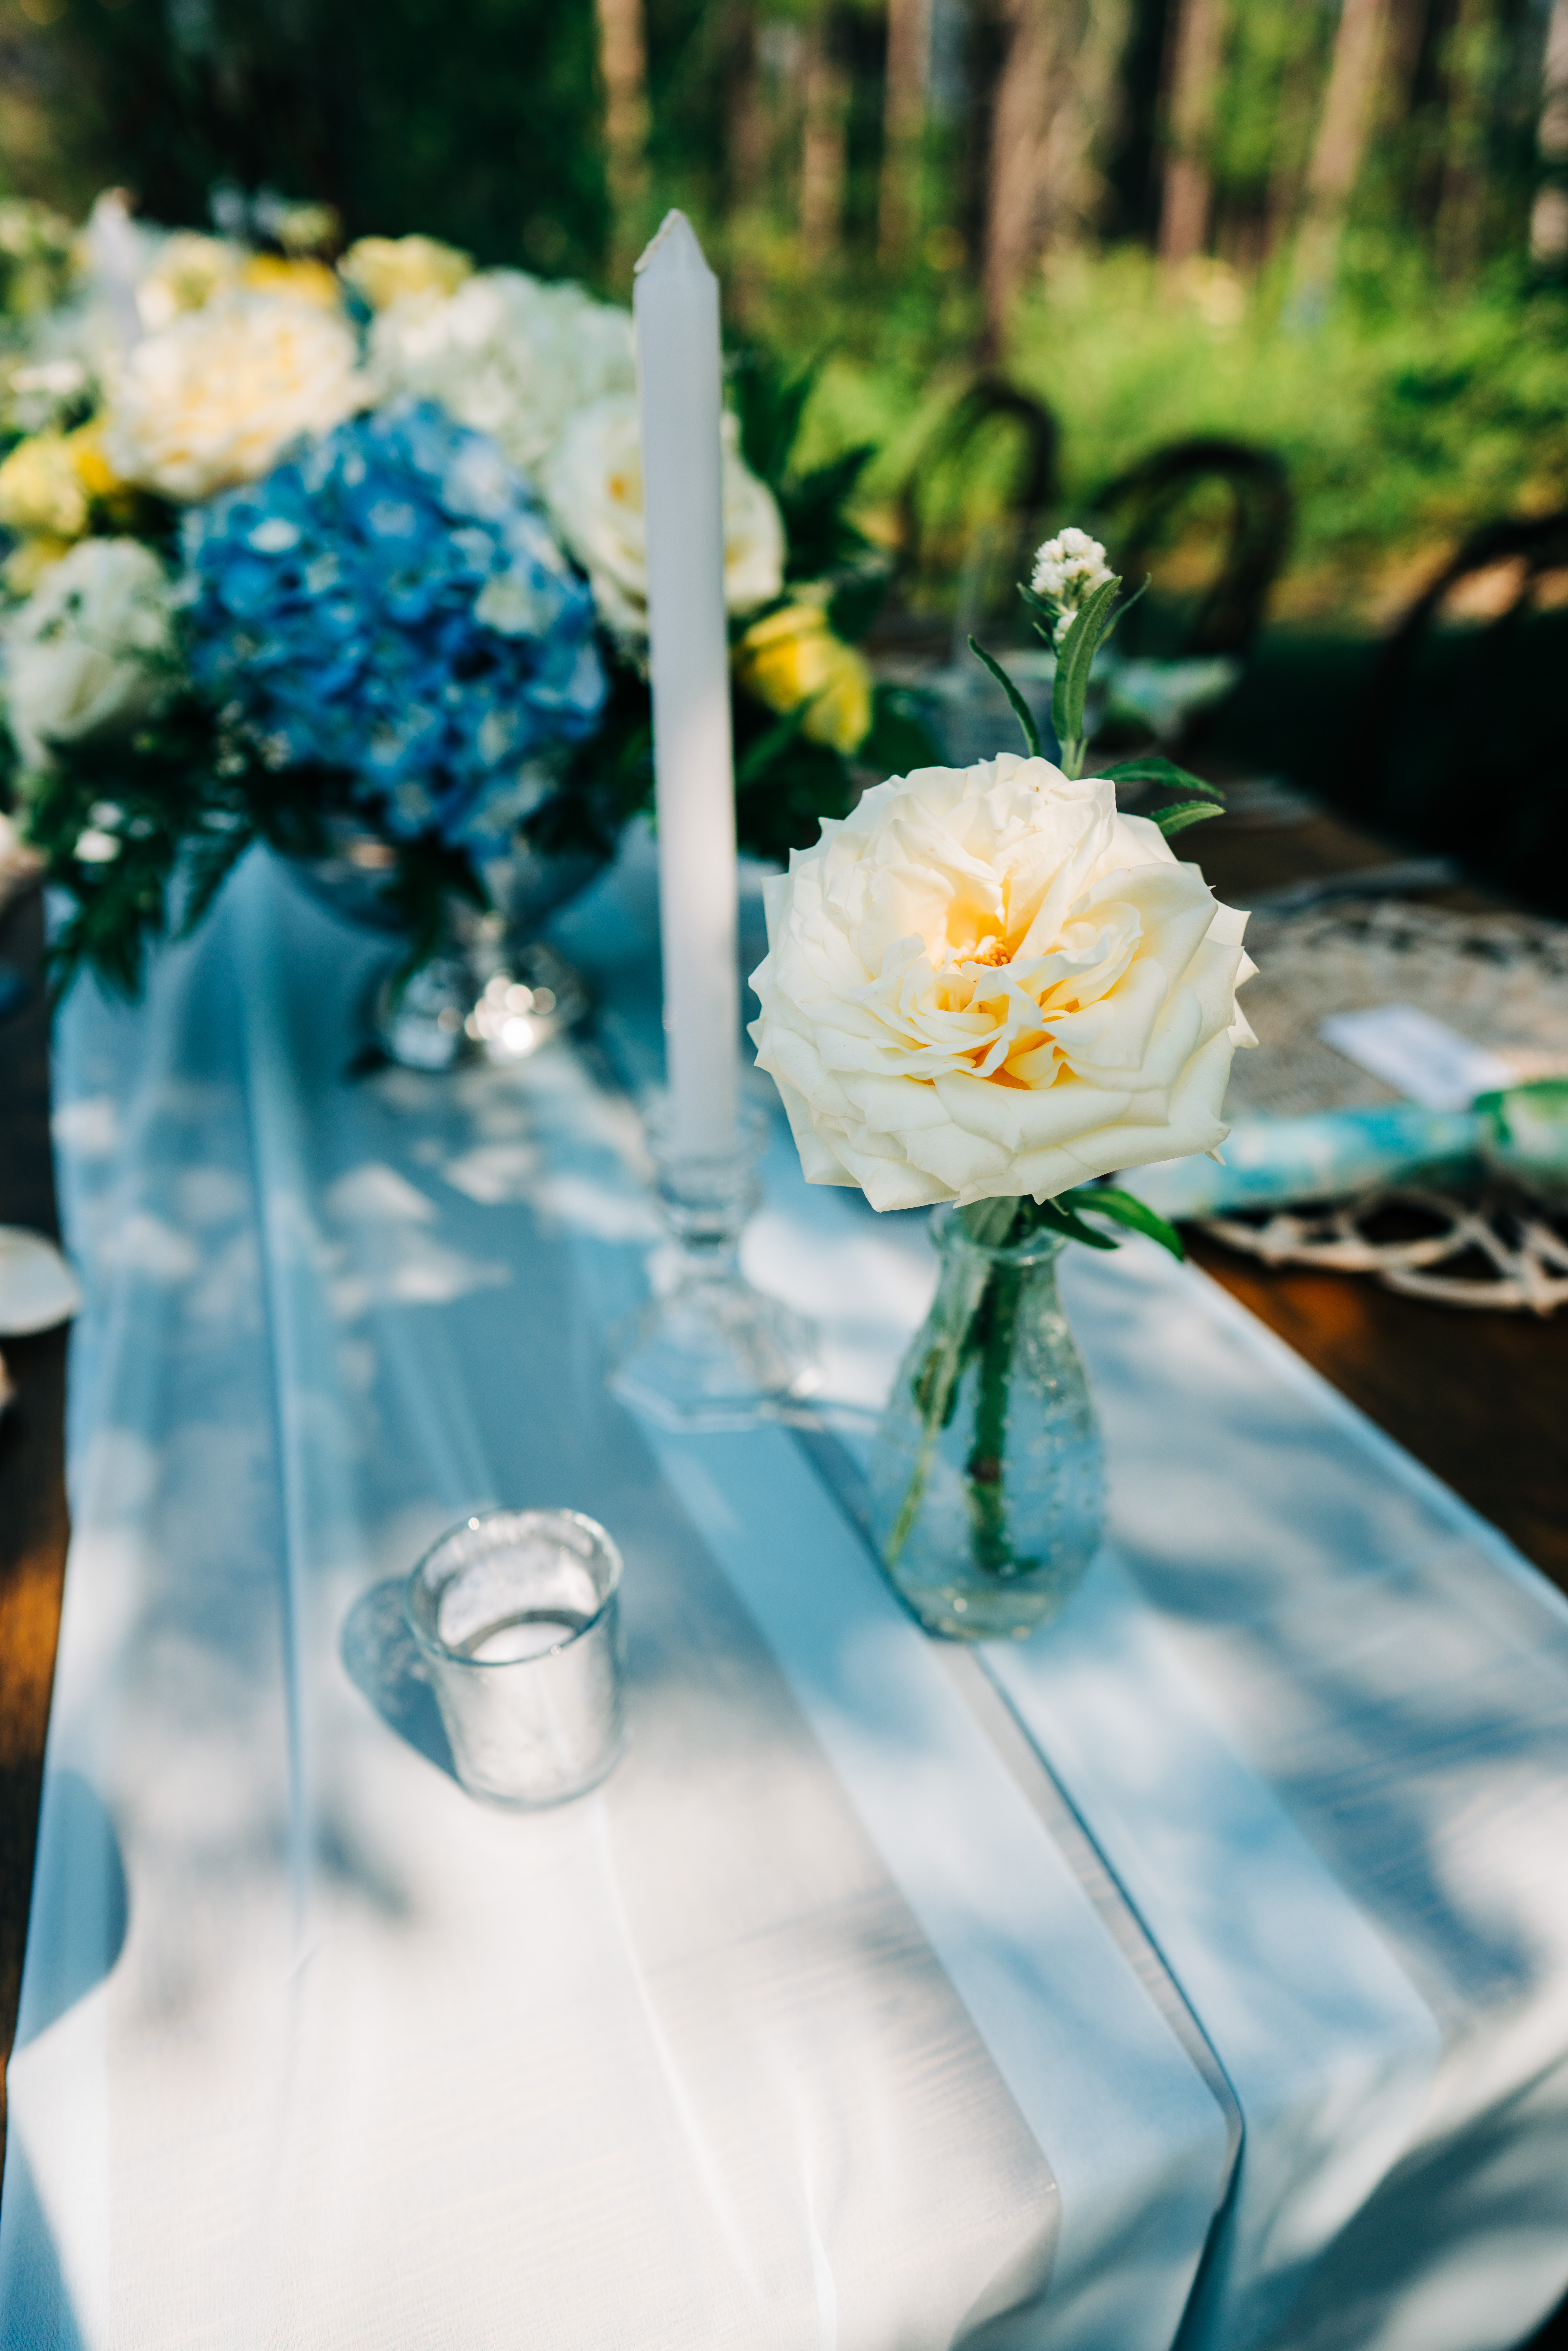 Light blue table runner as simple wedding decor